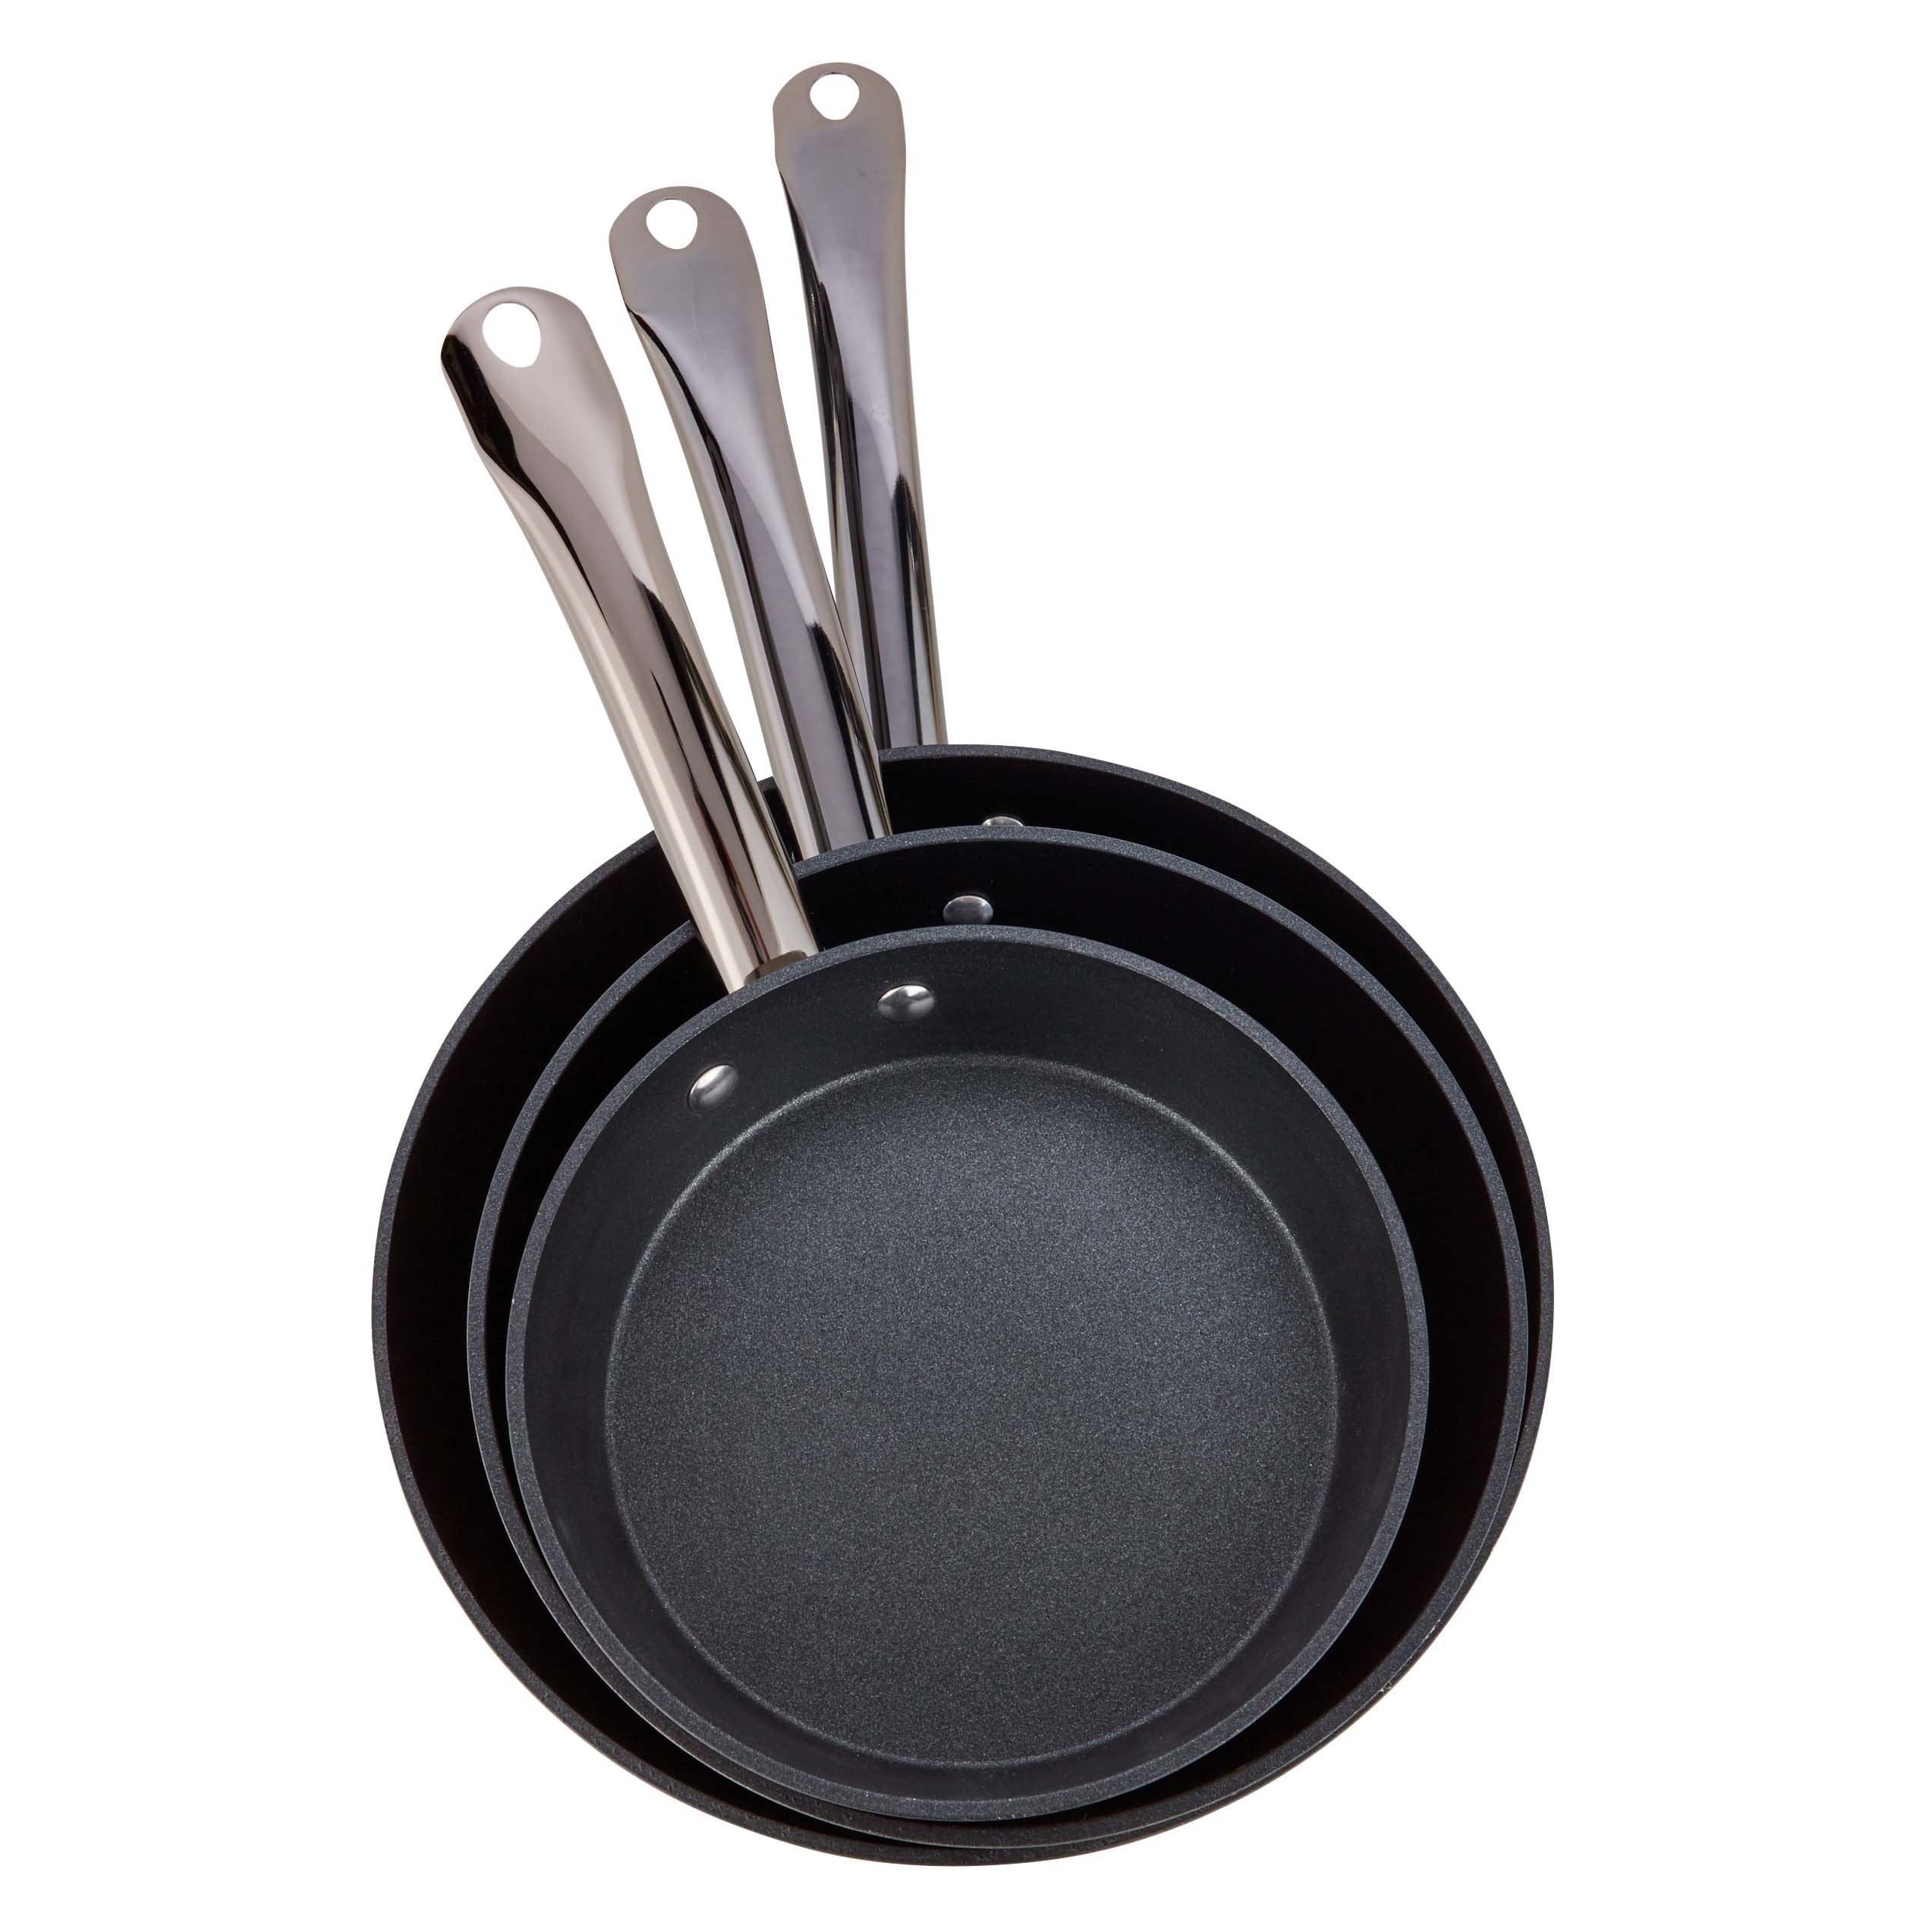 Kitchen & Table by H-E-B Non-Stick Fry Pans - Classic Black